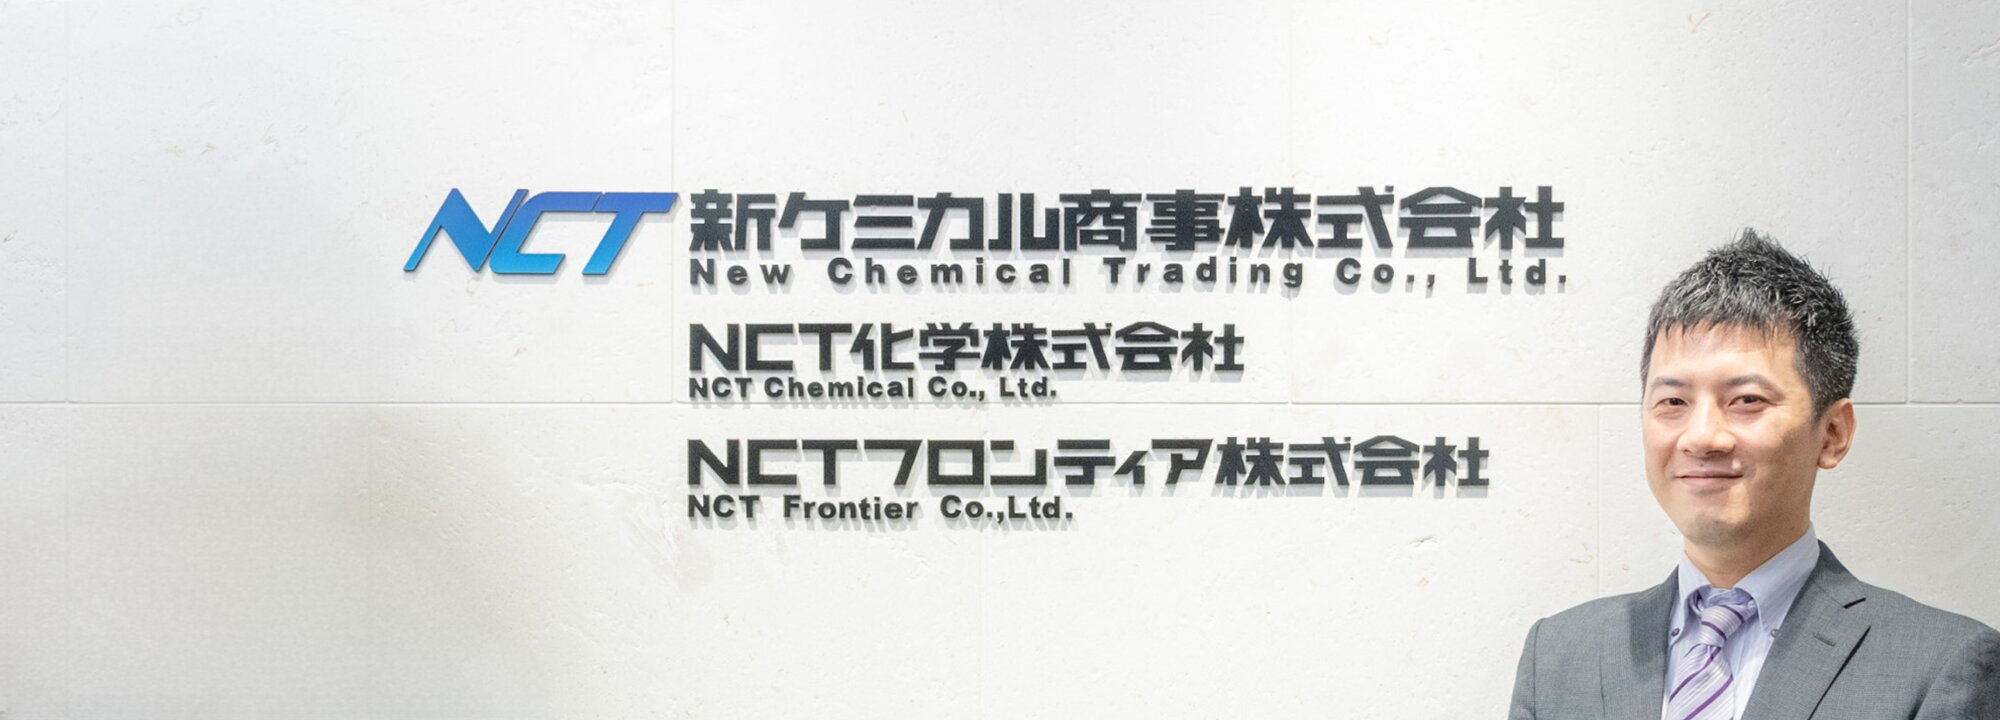 NCT新ケミカル商事株式会社 NCT化学株式会社 NCTフロンティア株式会社 人物